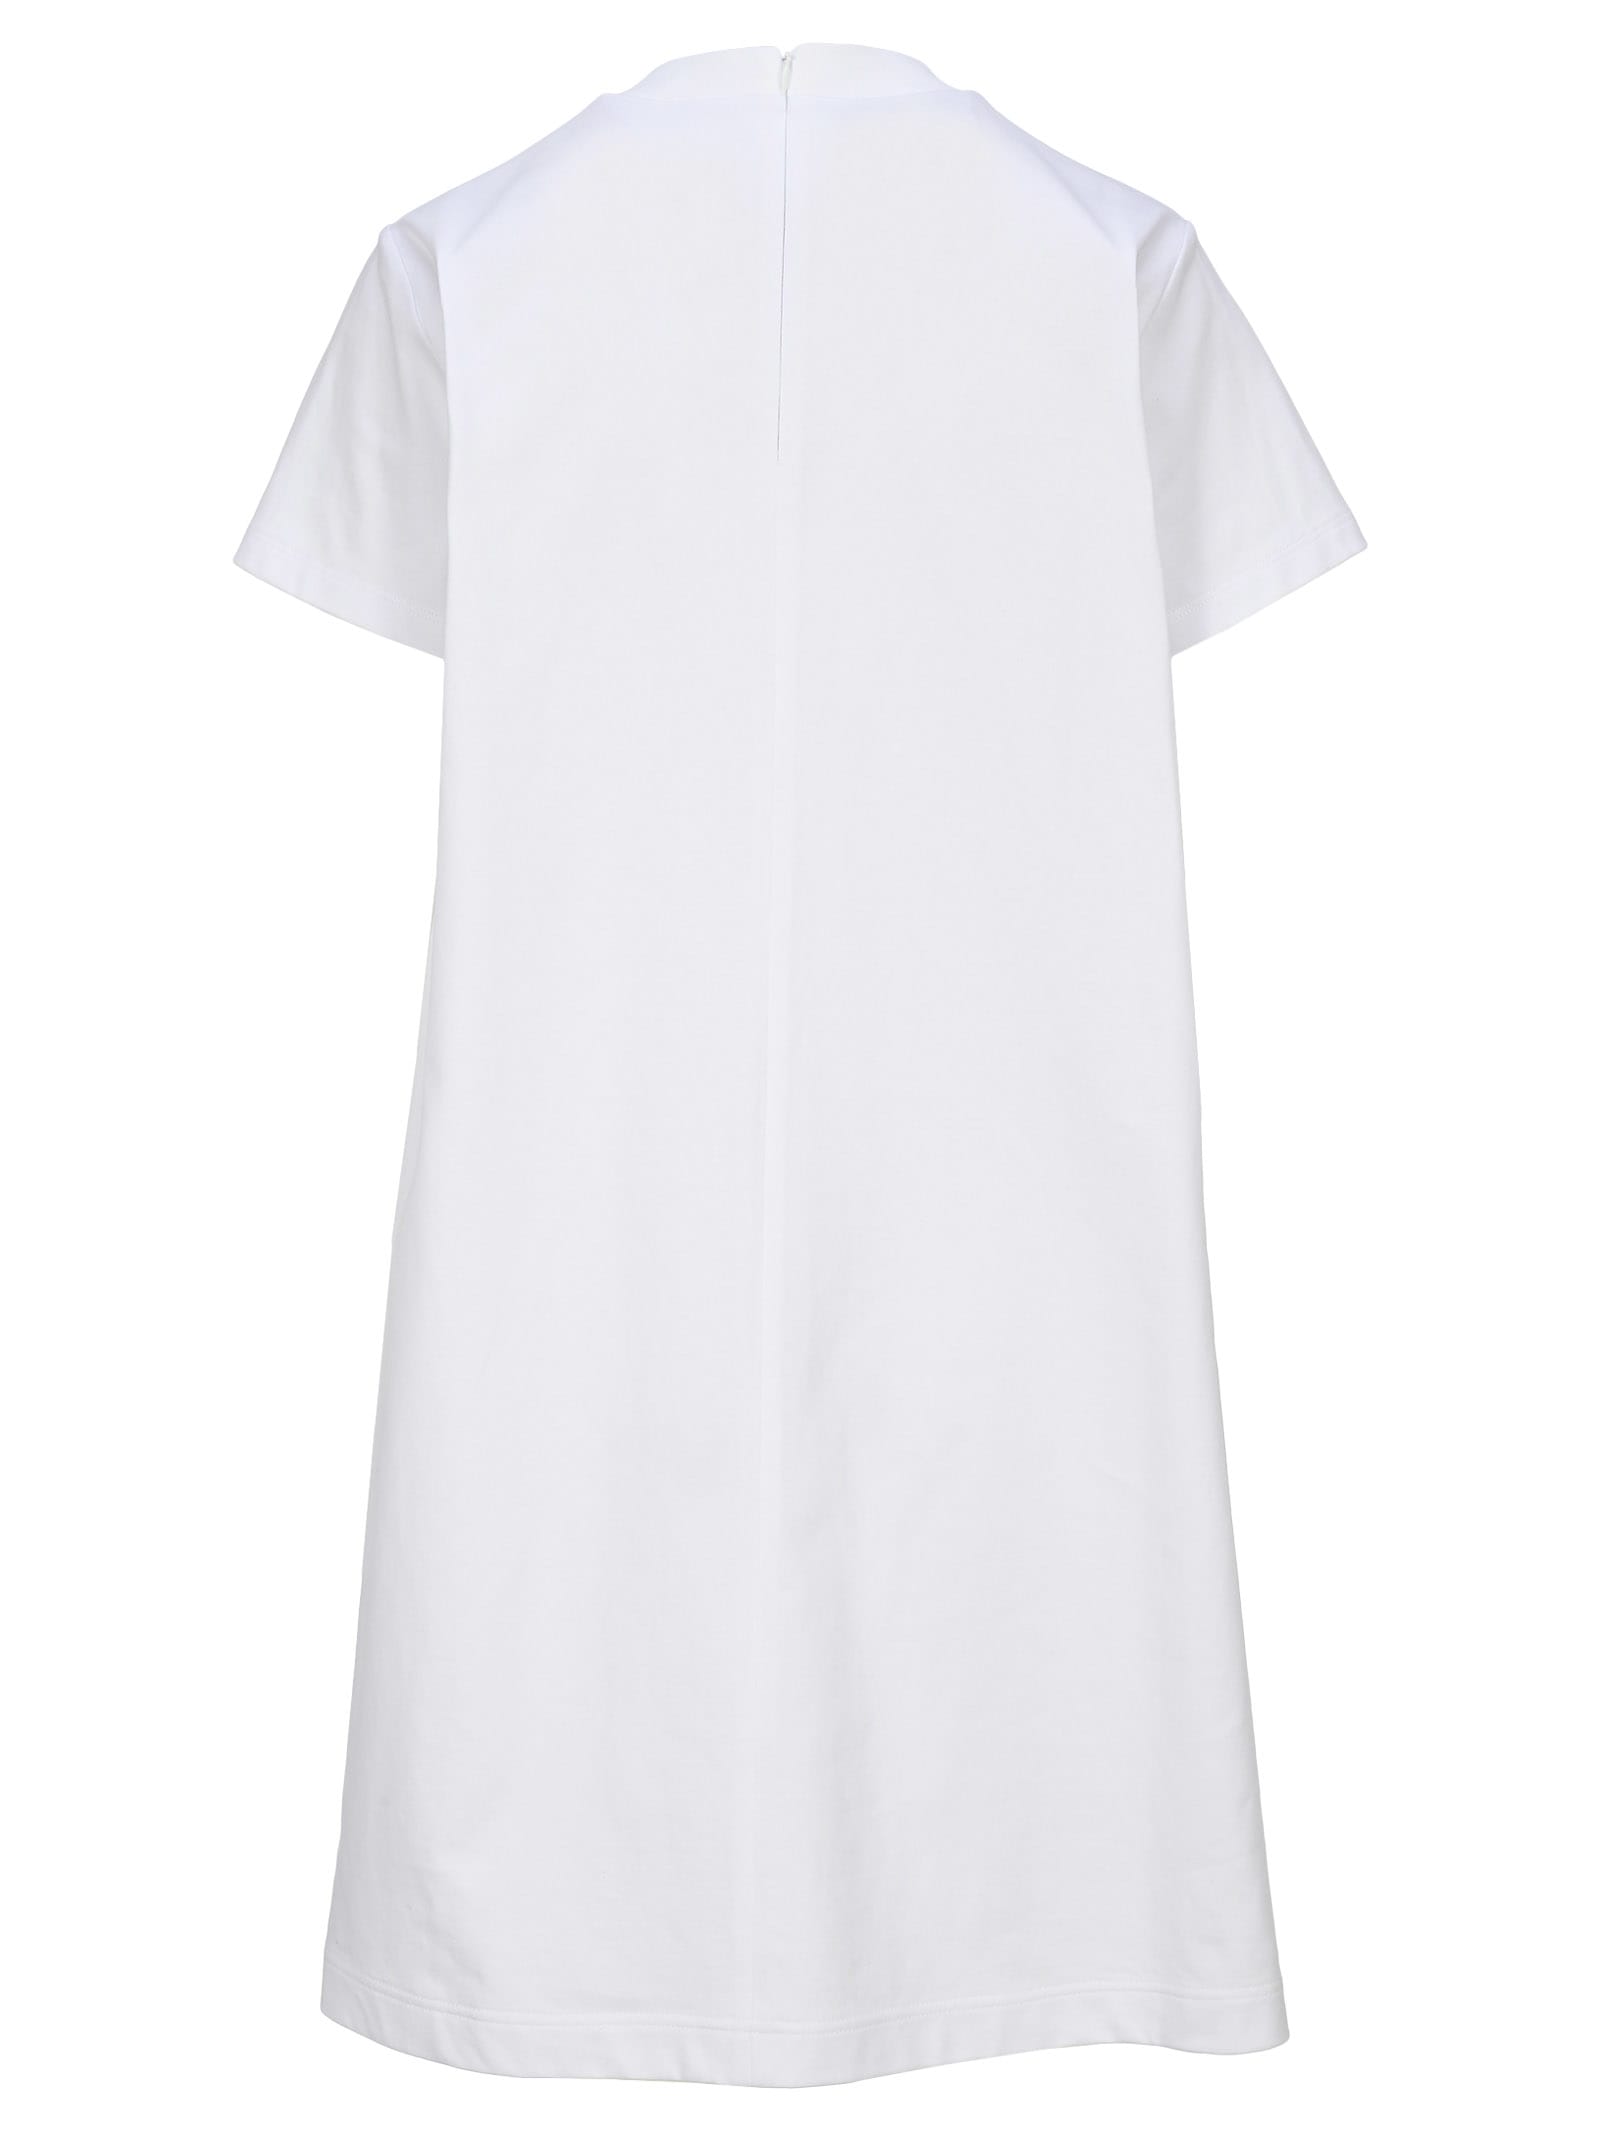 tee shirt dress white